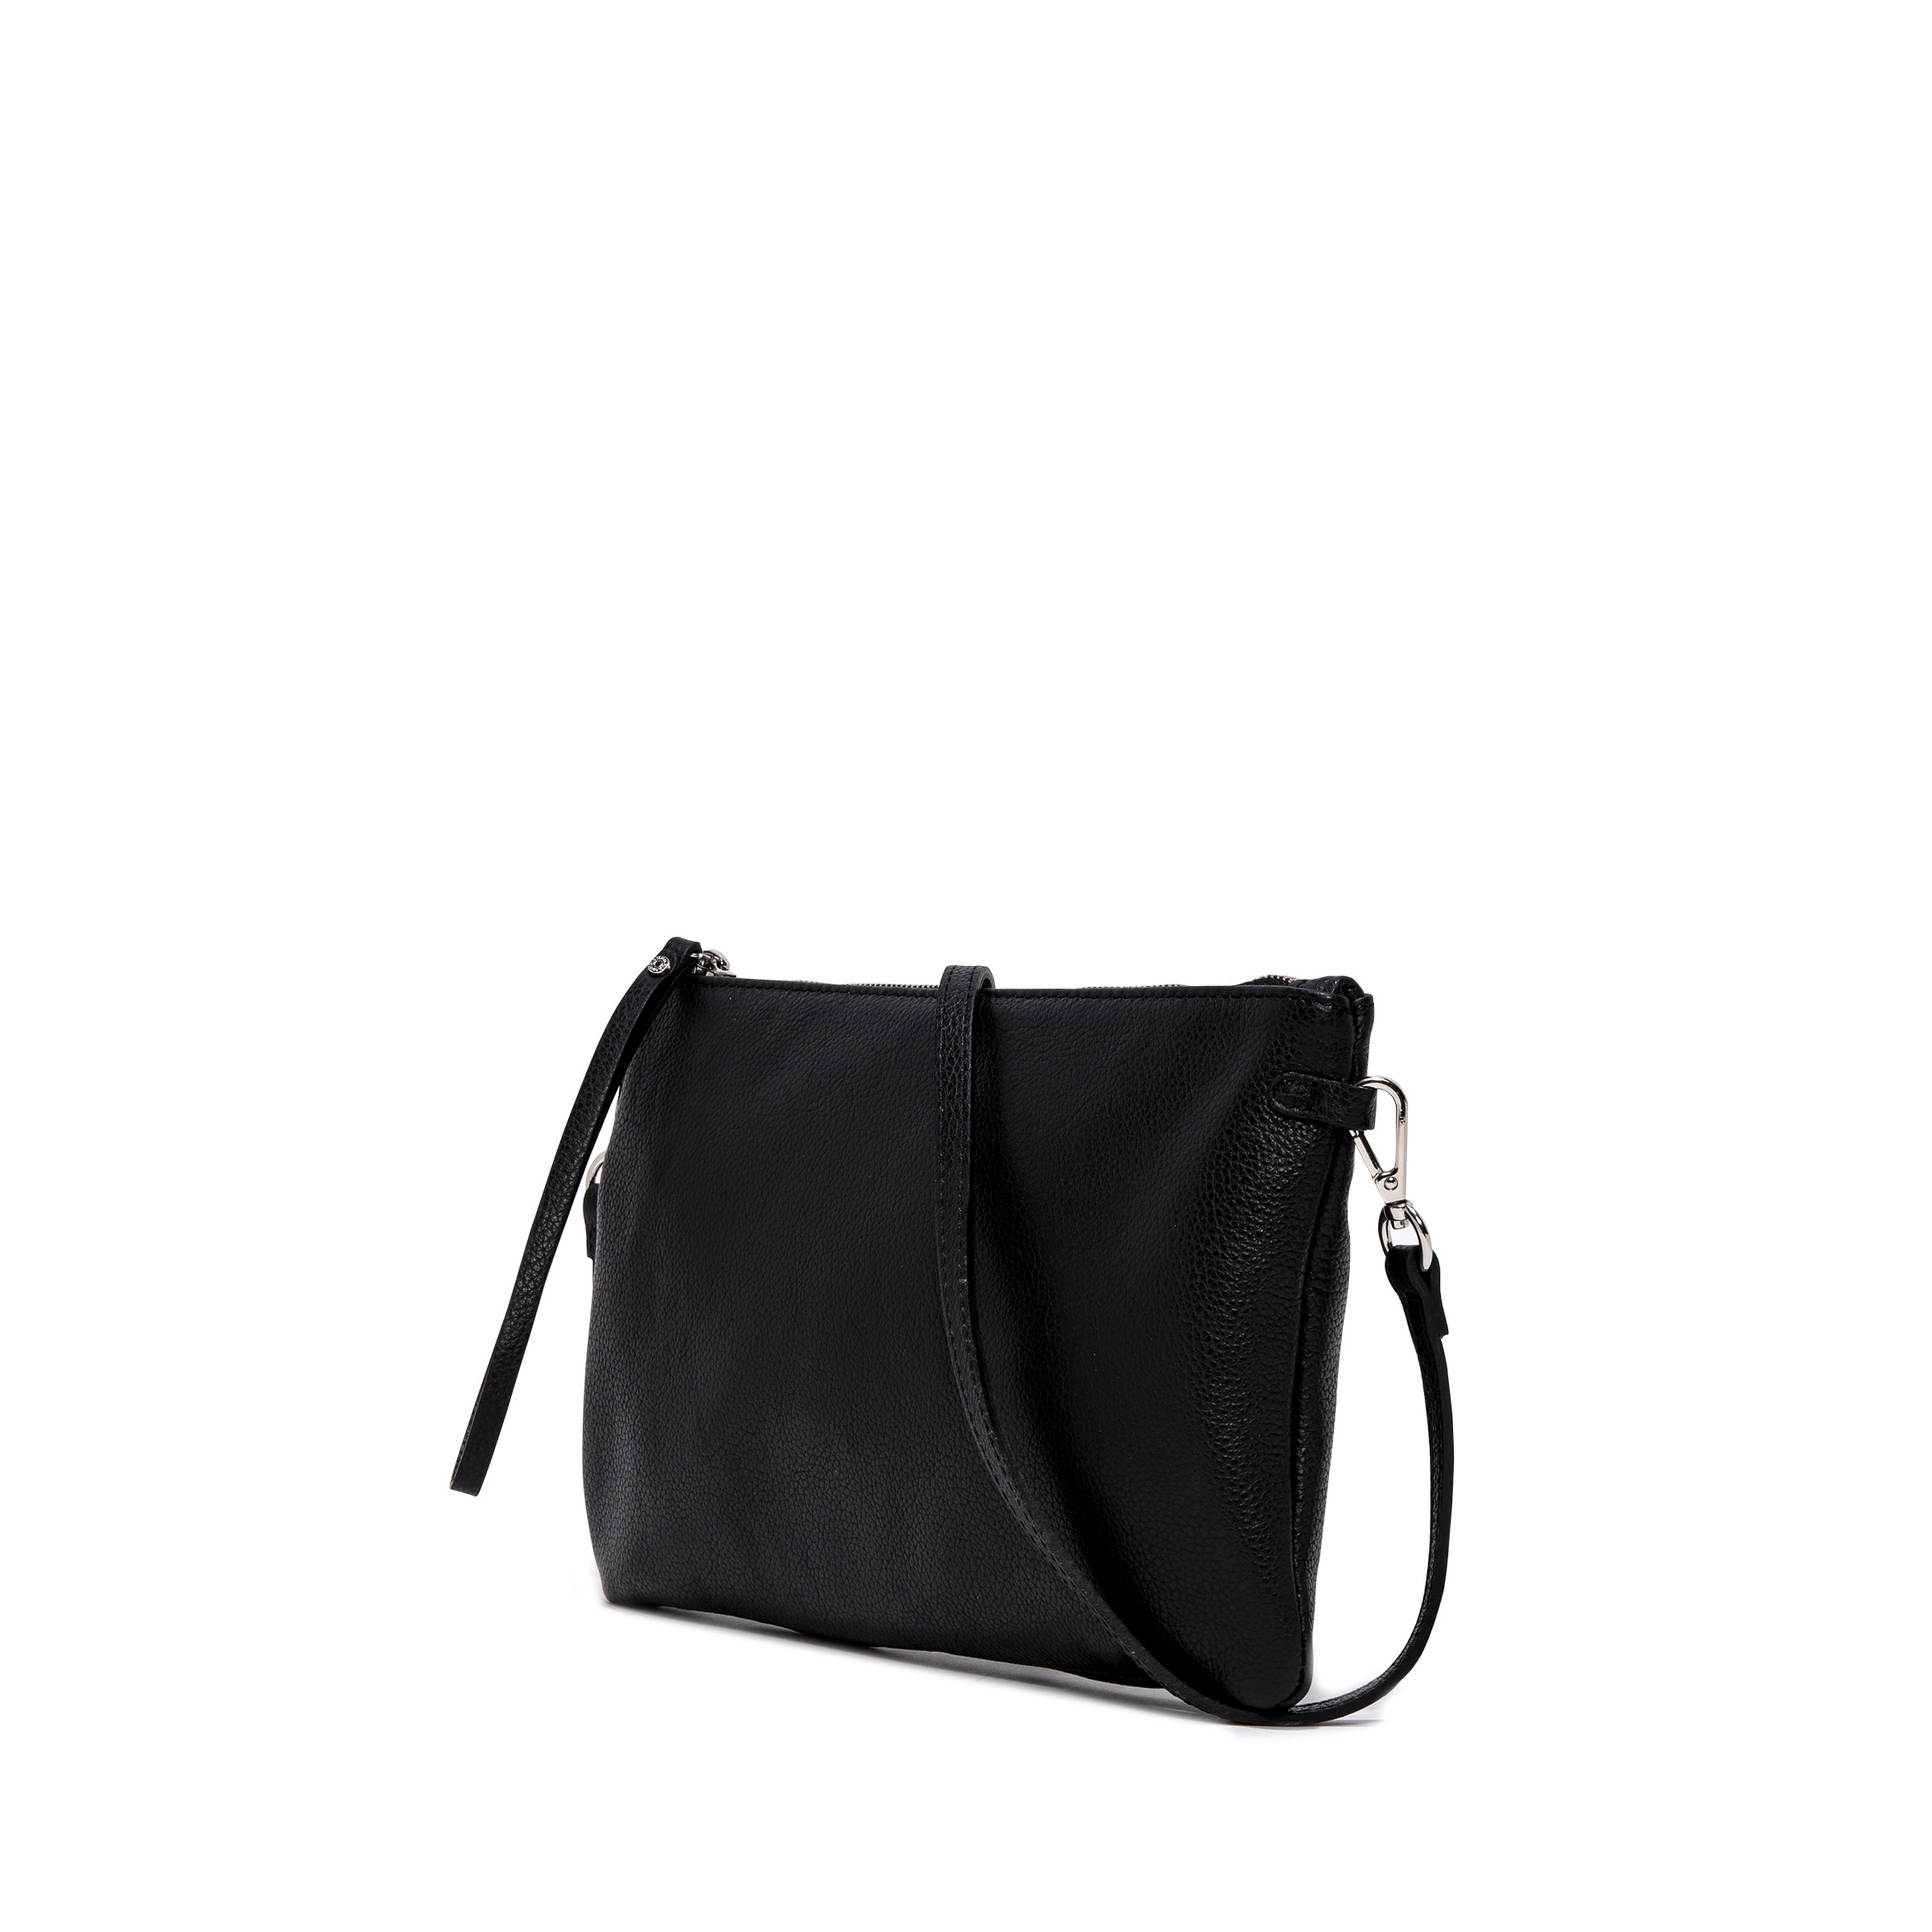 Gianni Chiarini - Hermy leather bag, Black, large image number 2